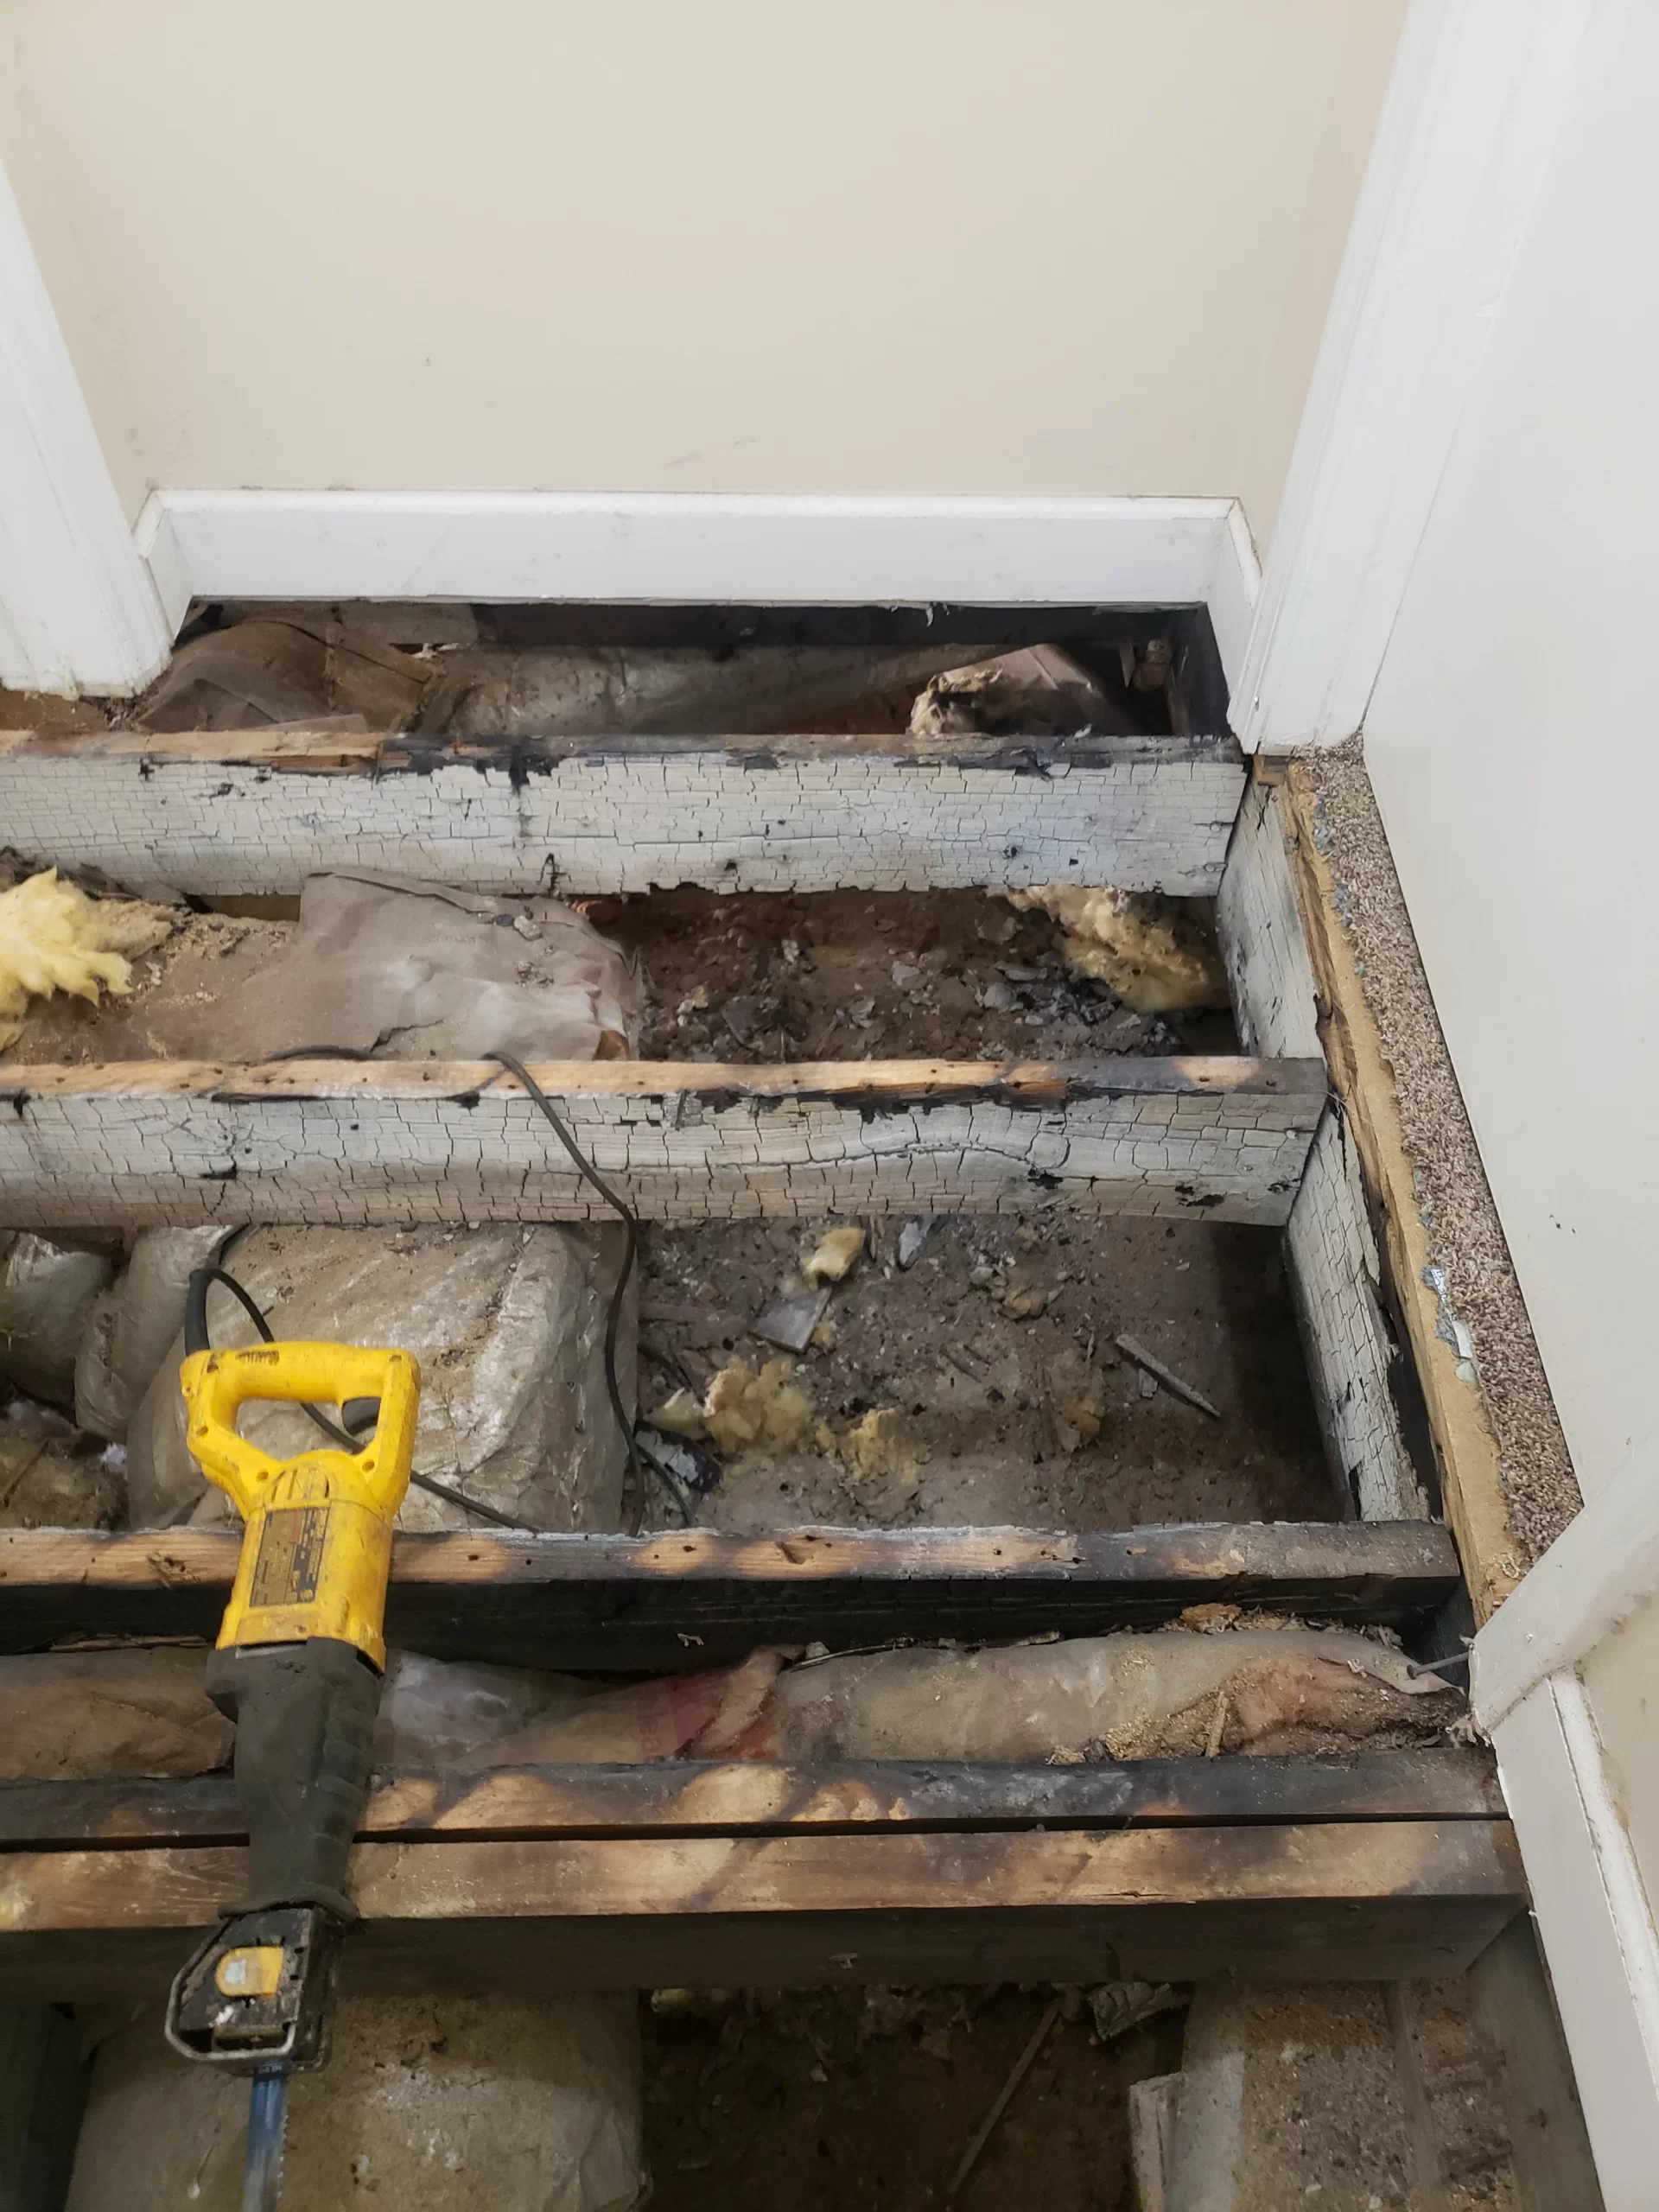 Rotten floor being replaced in basement